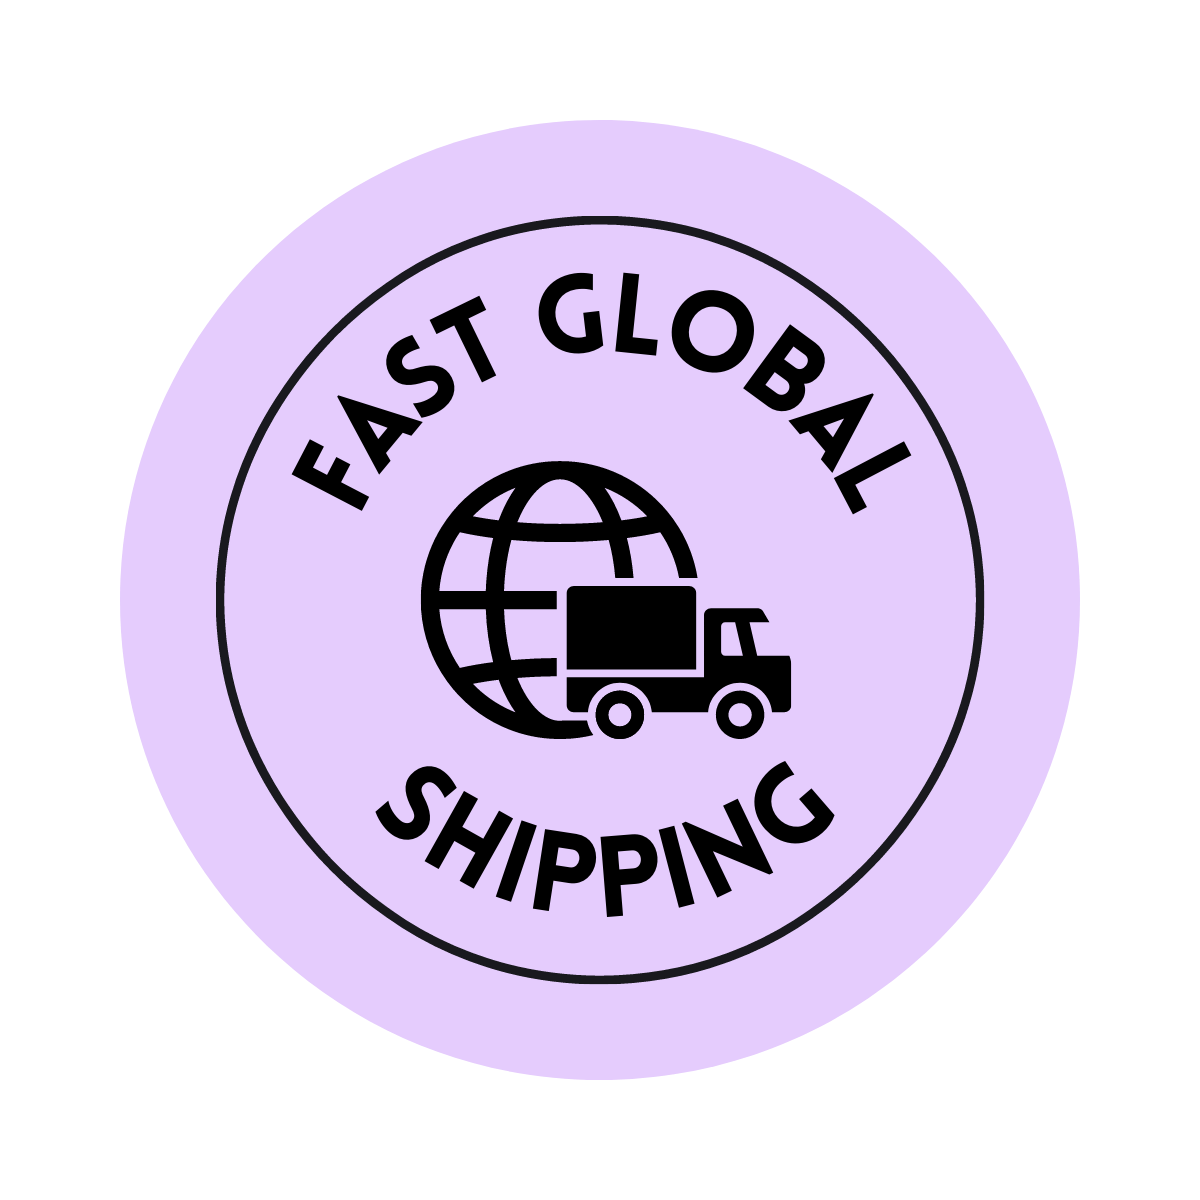 fast global shipping logo